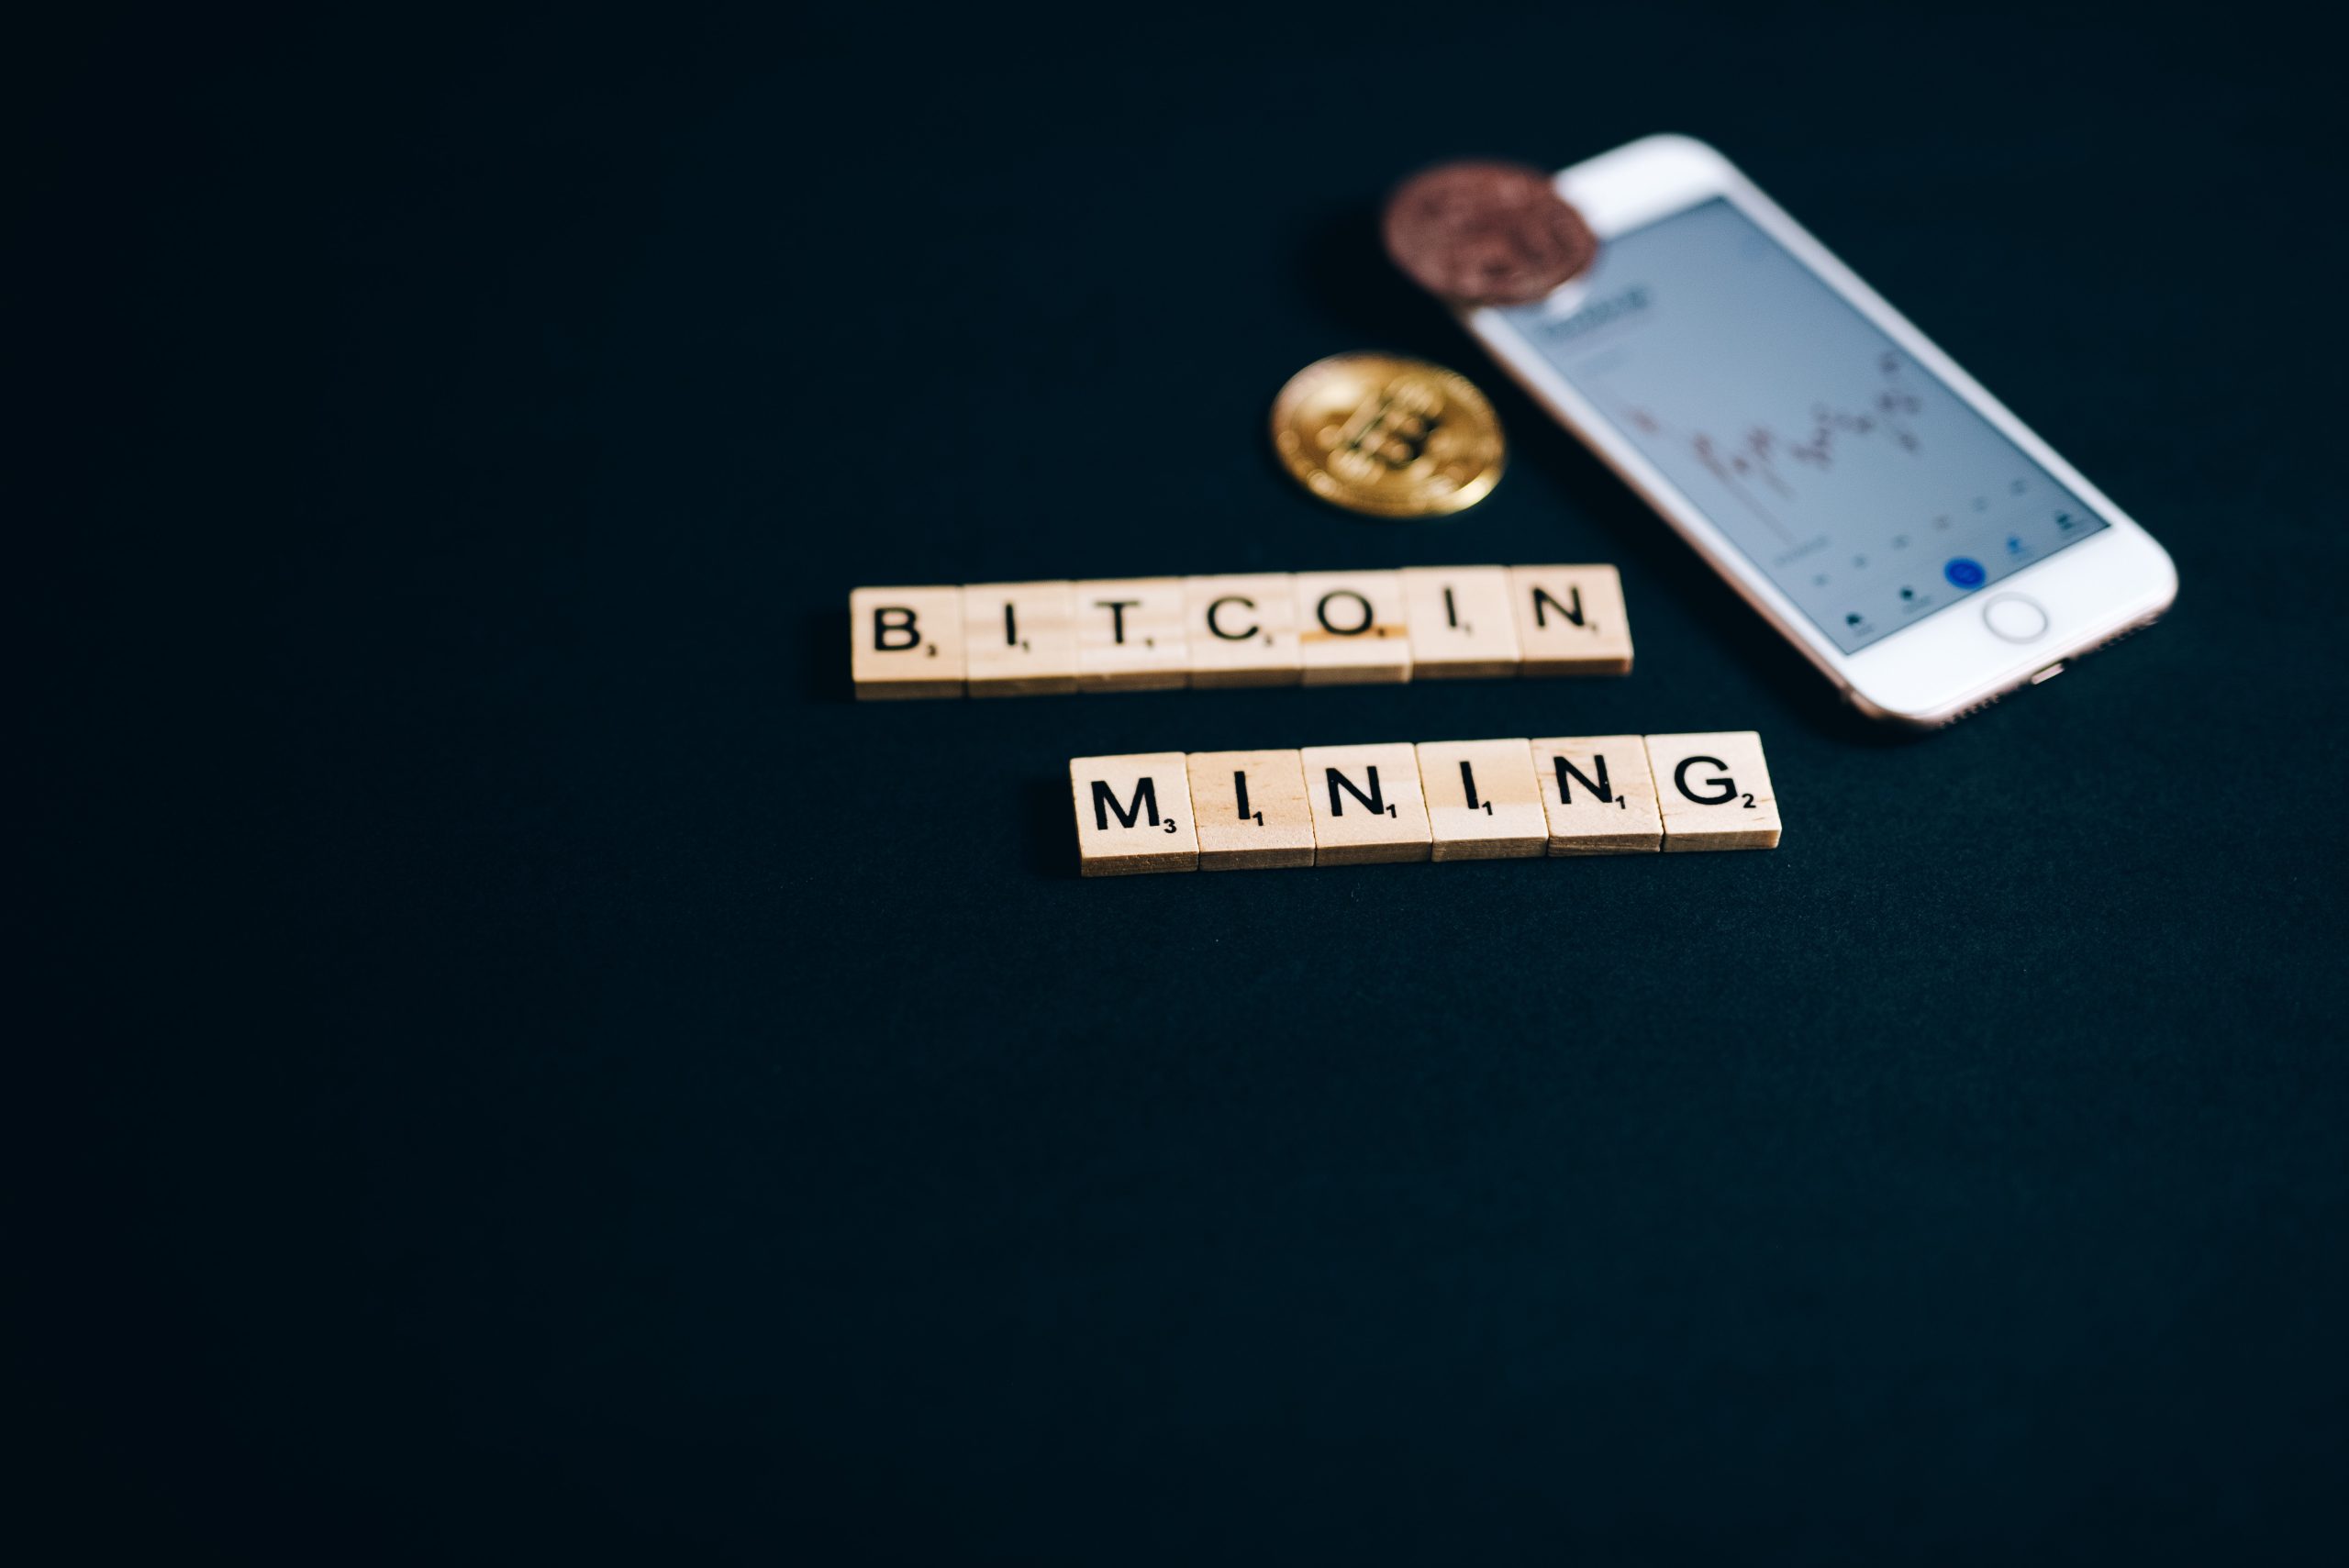 A phone, bitcoin, and a bitcoin mining nametag.